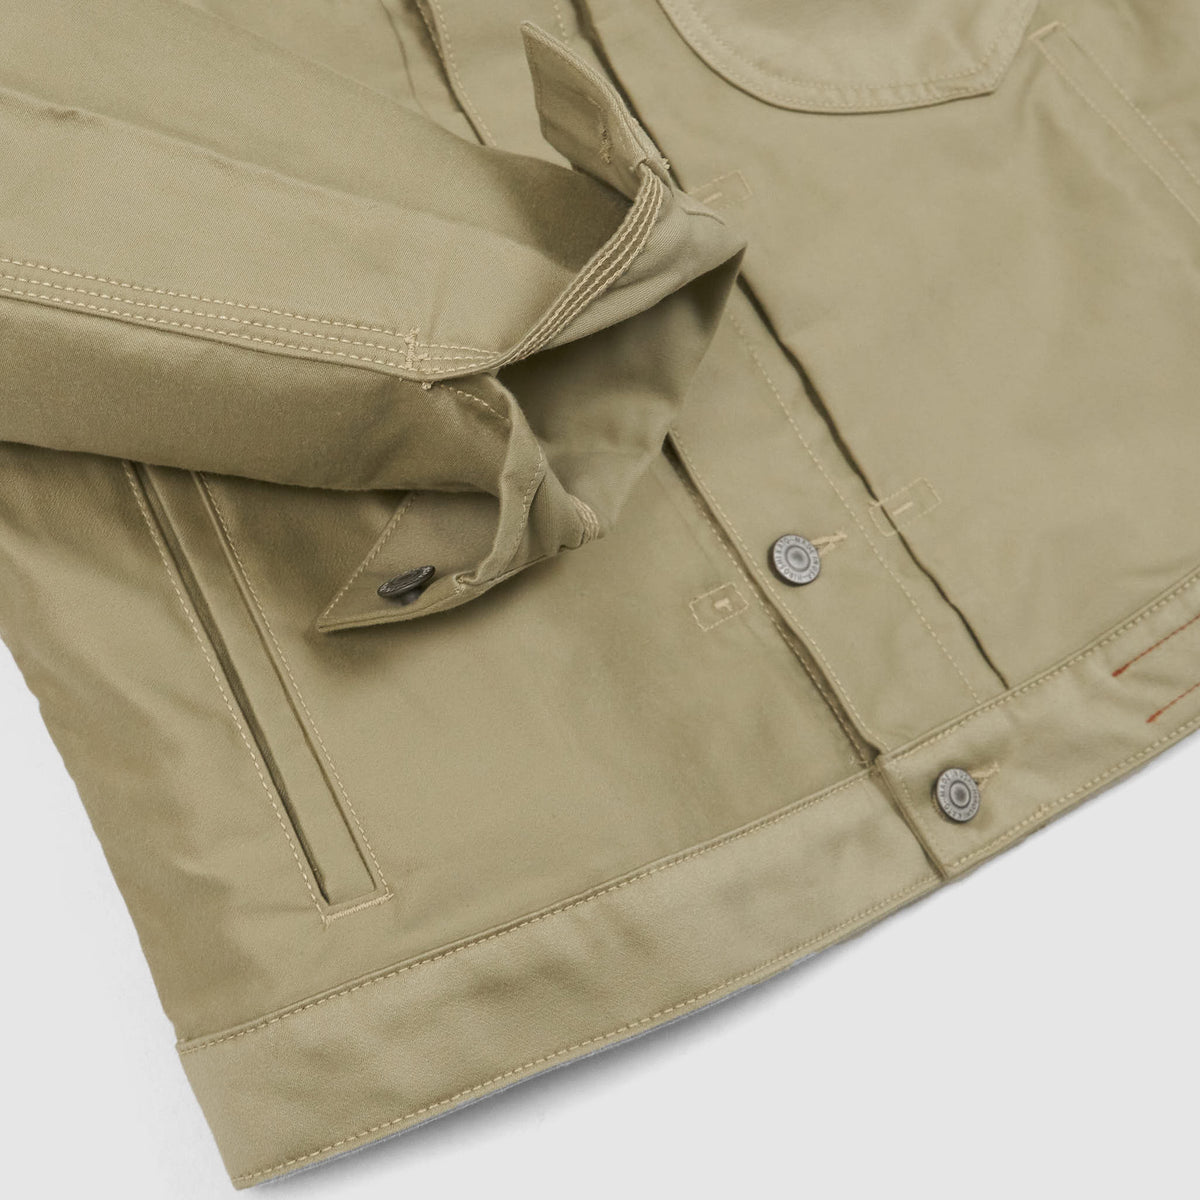 Hiroshi Kato Moleskin Natural Type 1 Denim Jacket